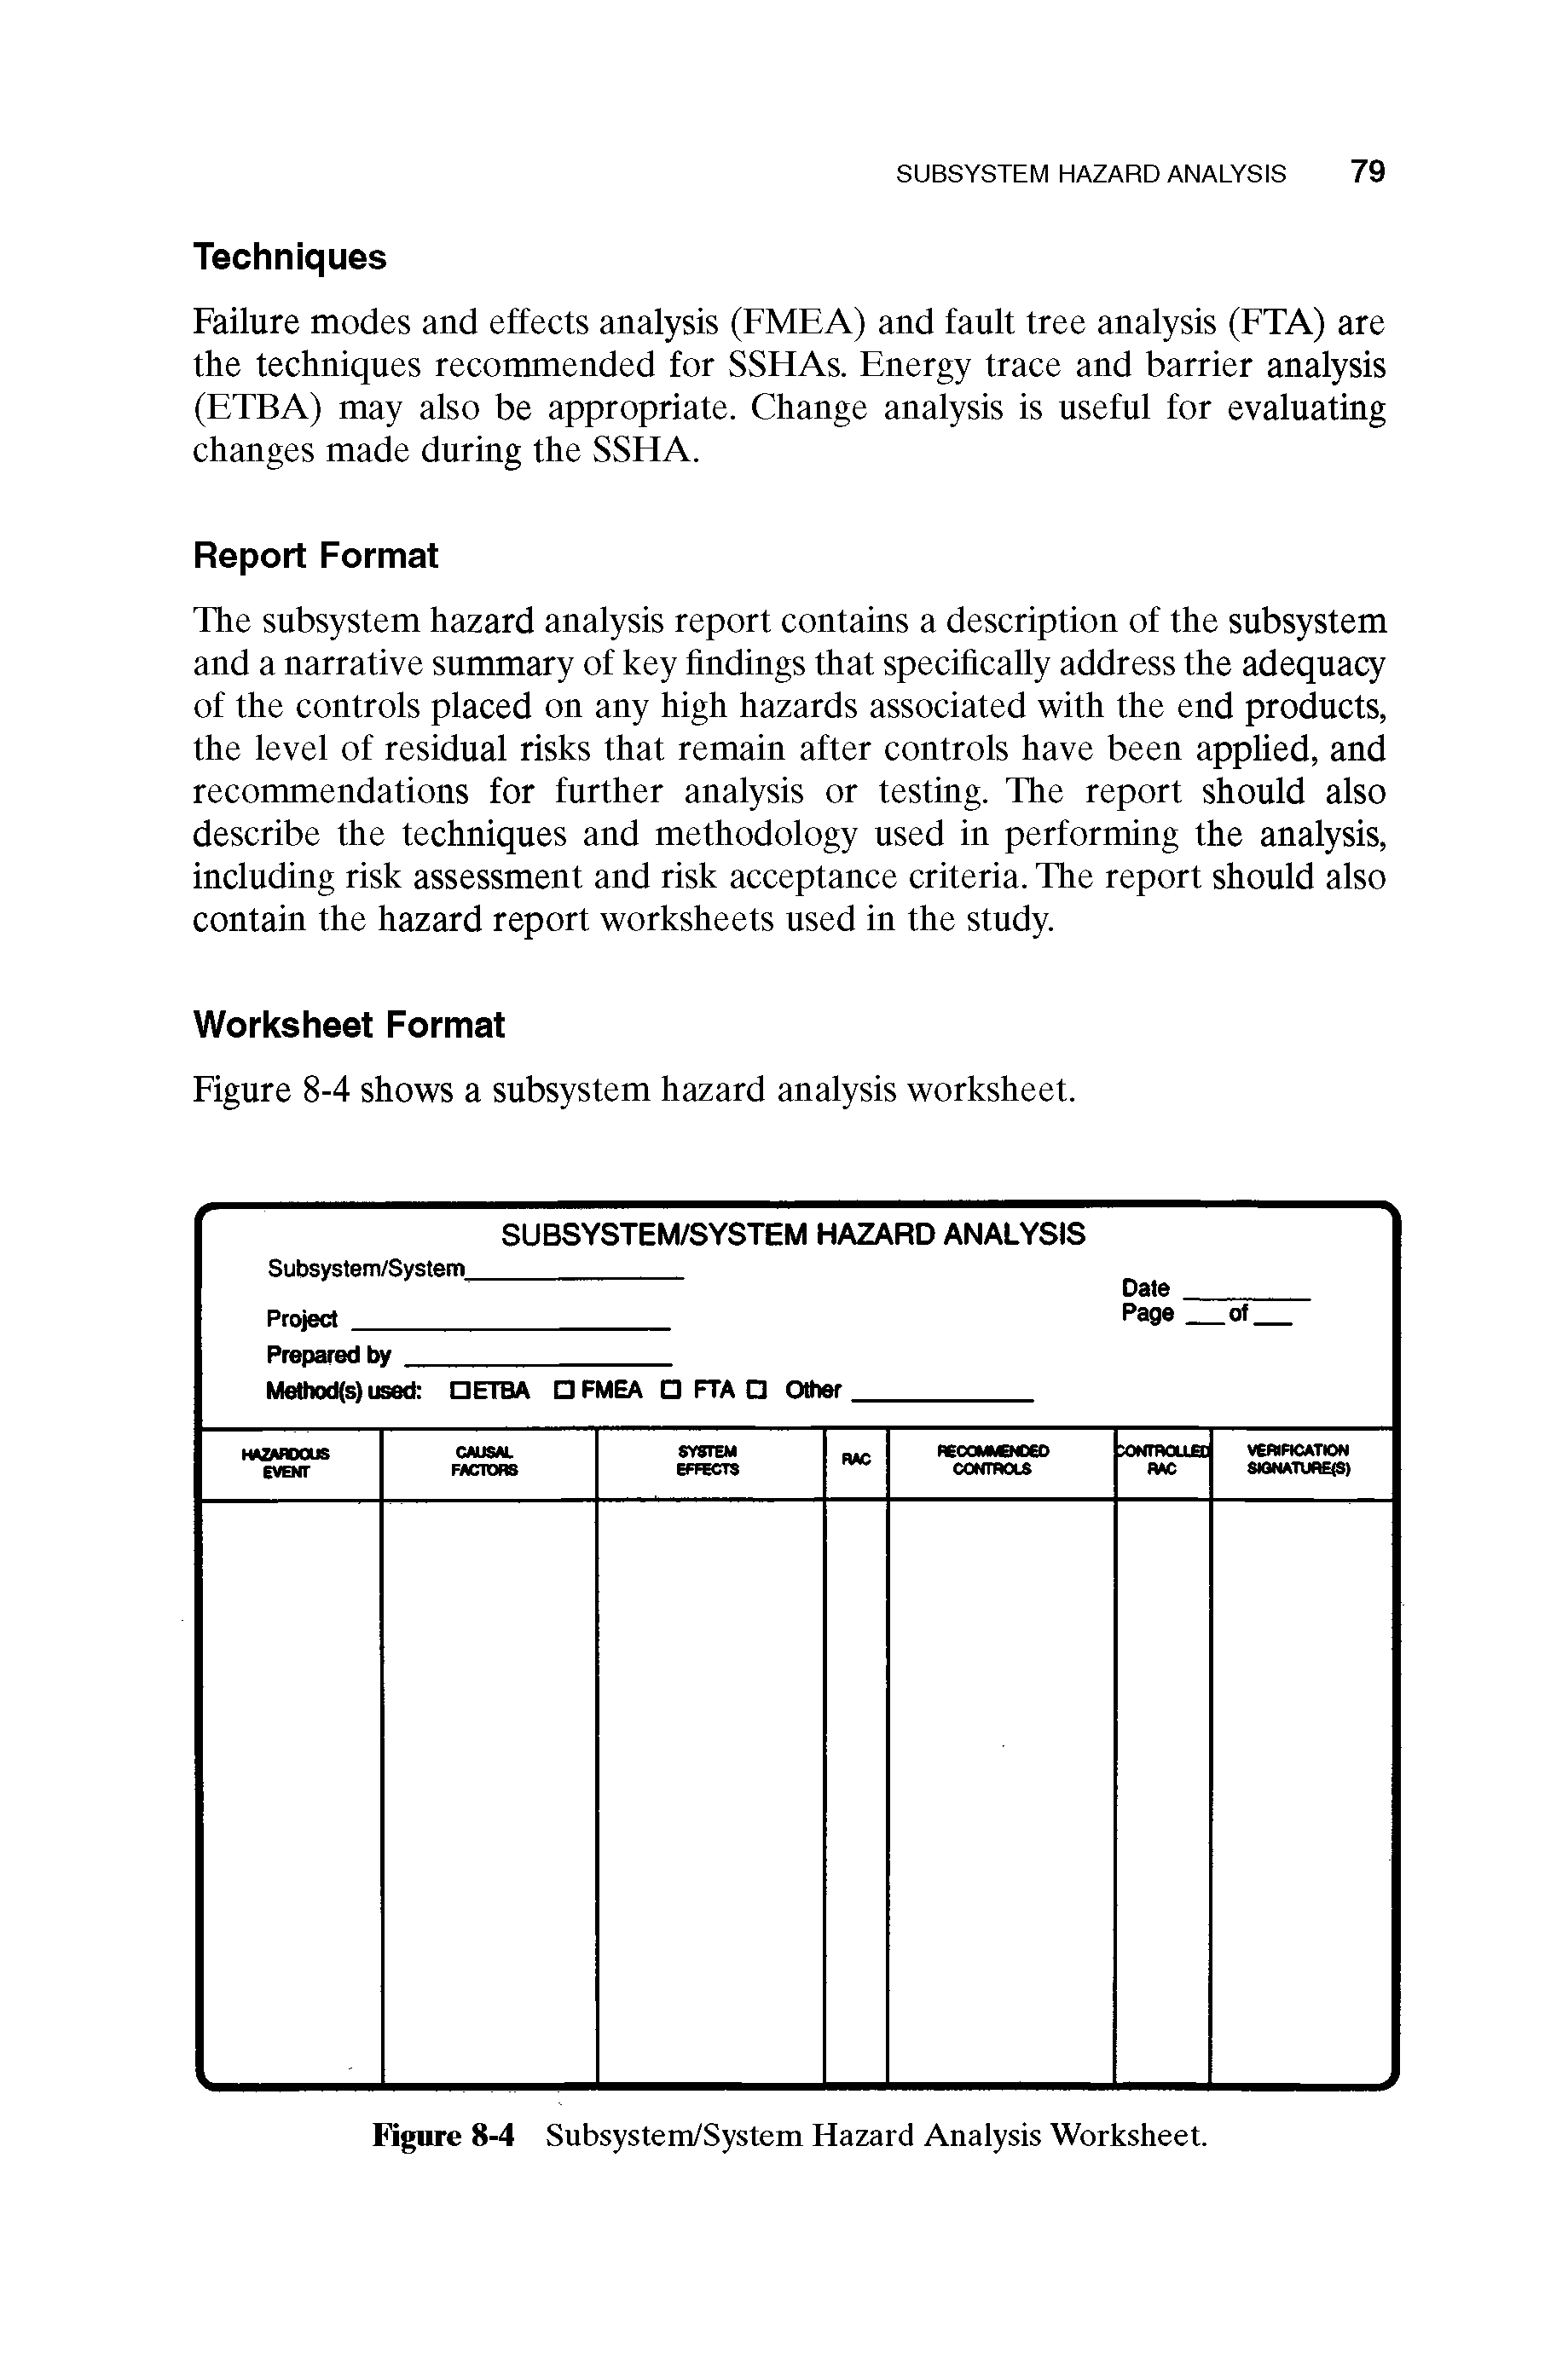 Figure 8-4 Subsystem/System Hazard Analysis Worksheet.